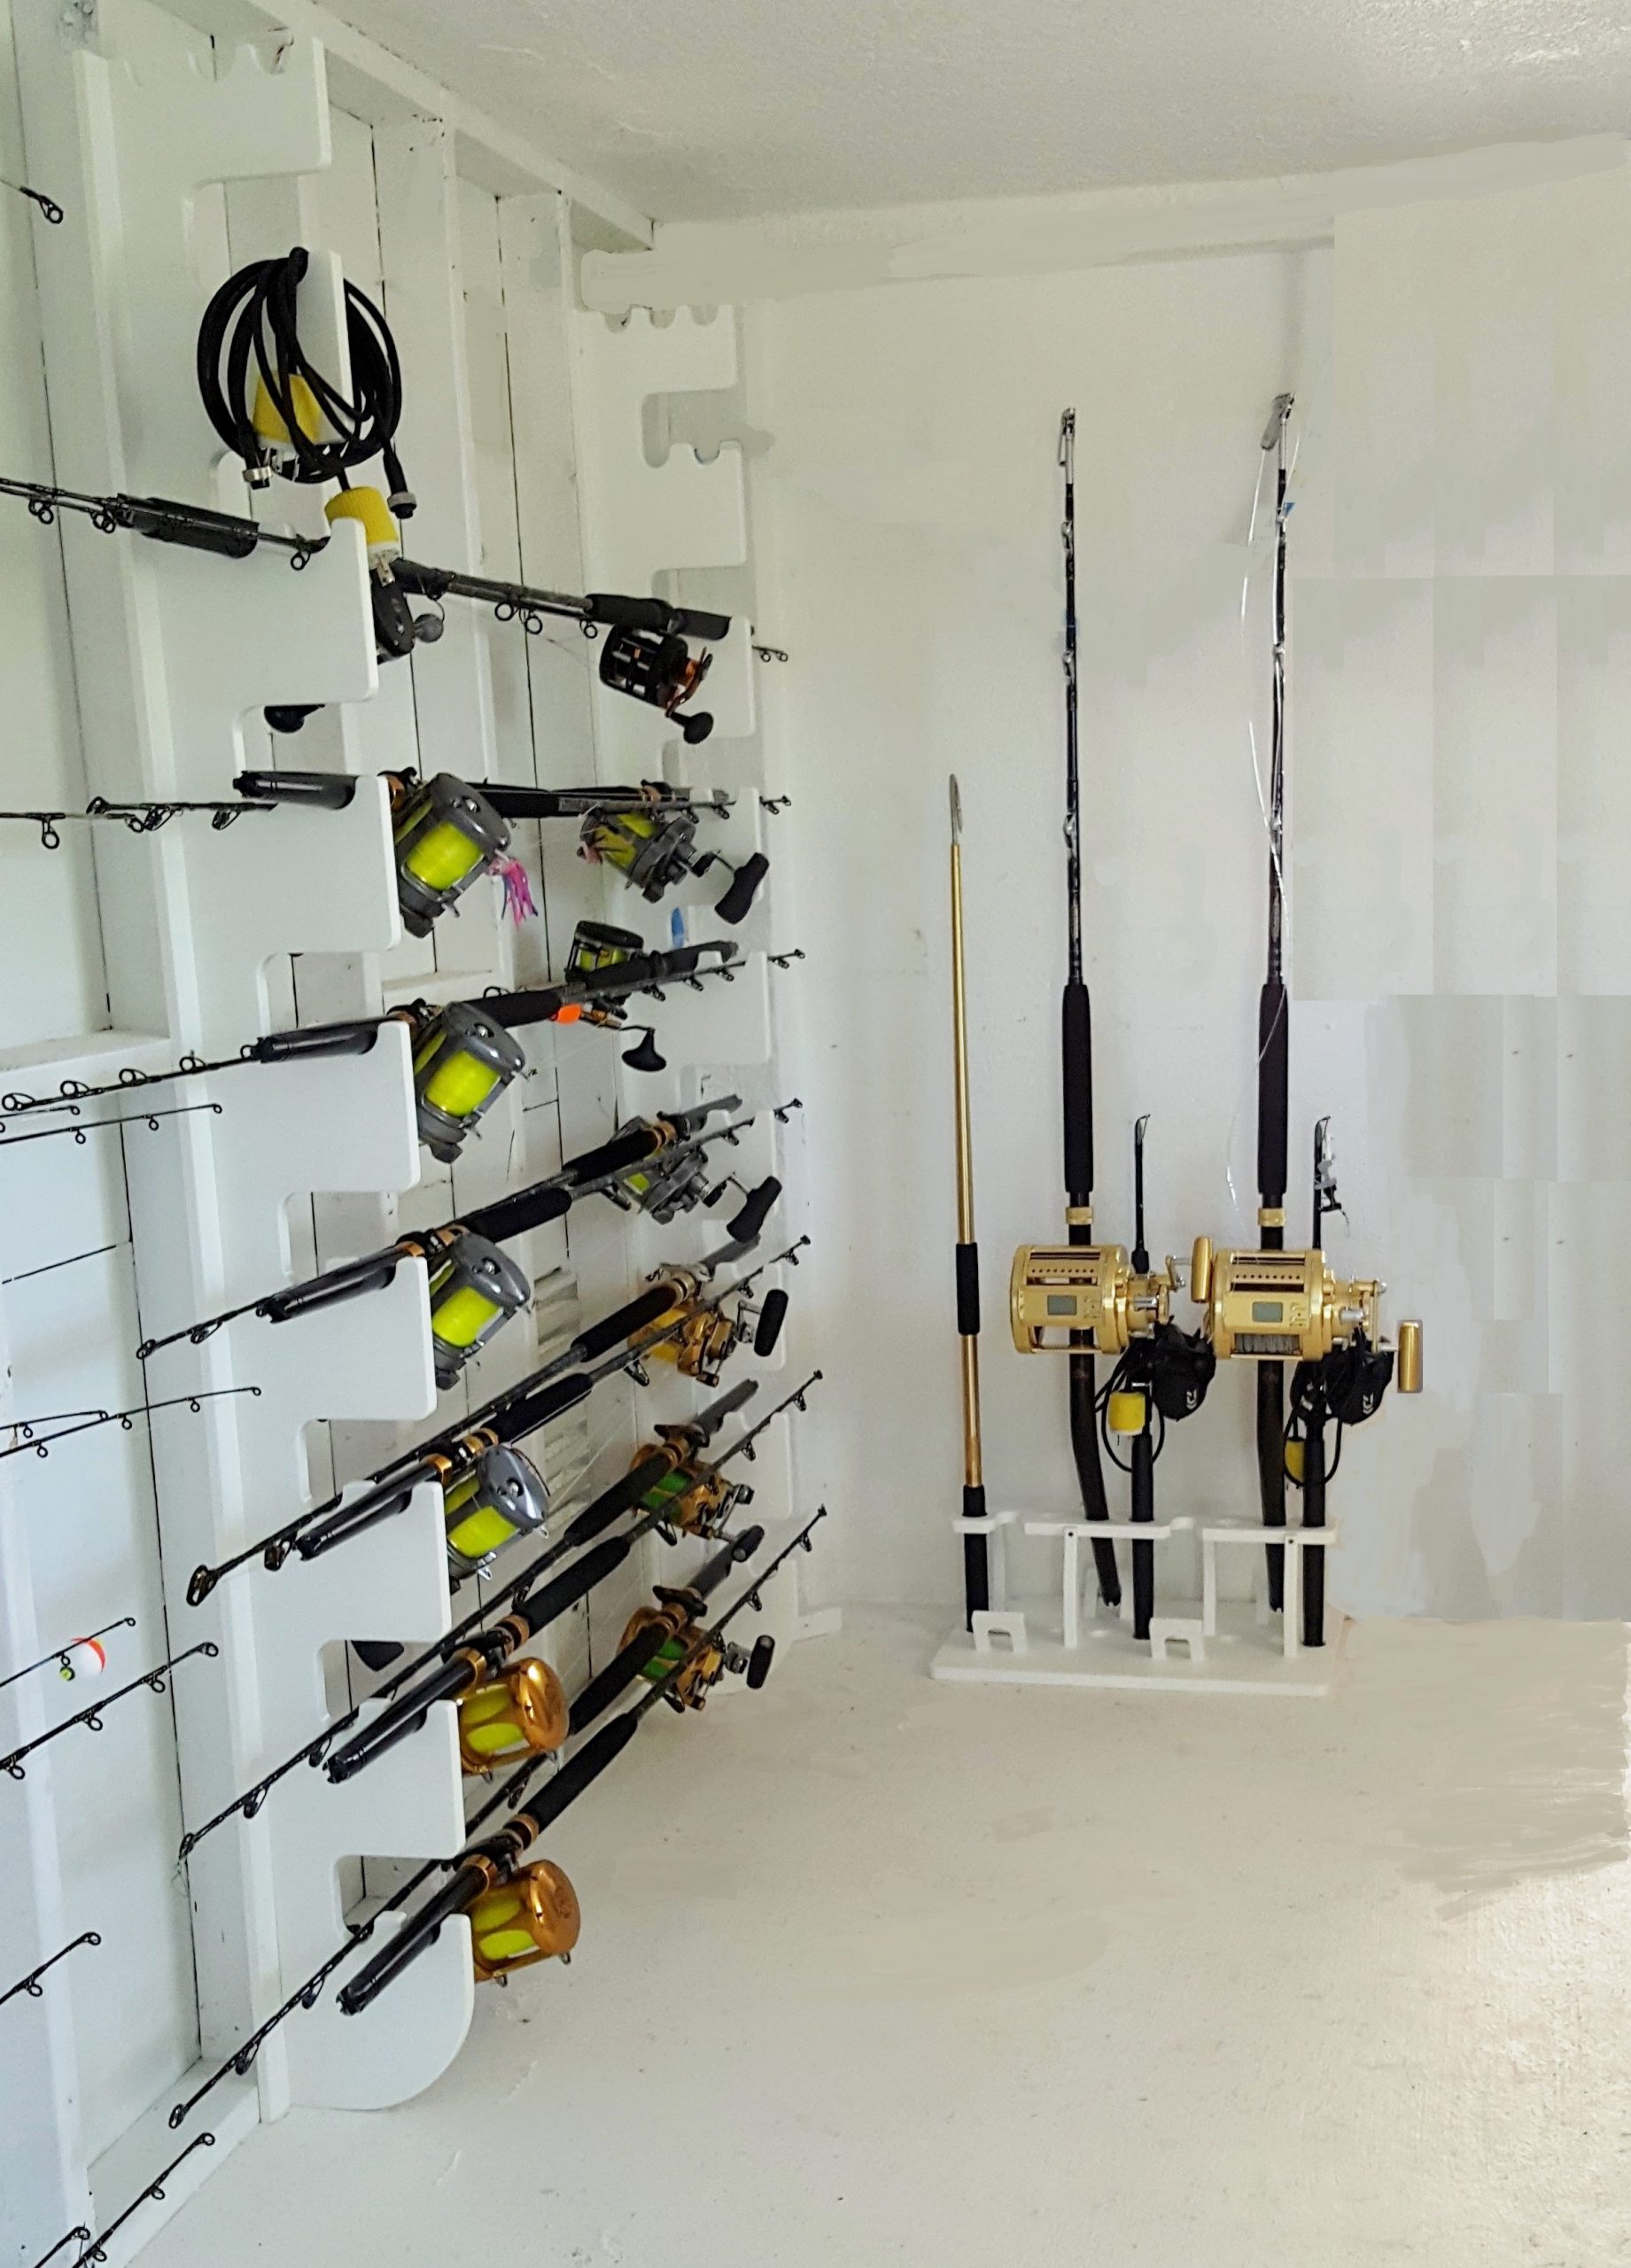 YYST Horizontal Fishing Rod Storage Rack Holder Wall Mount W Screws - No  Fishing Rod- to Hold 8 Fishing Rods